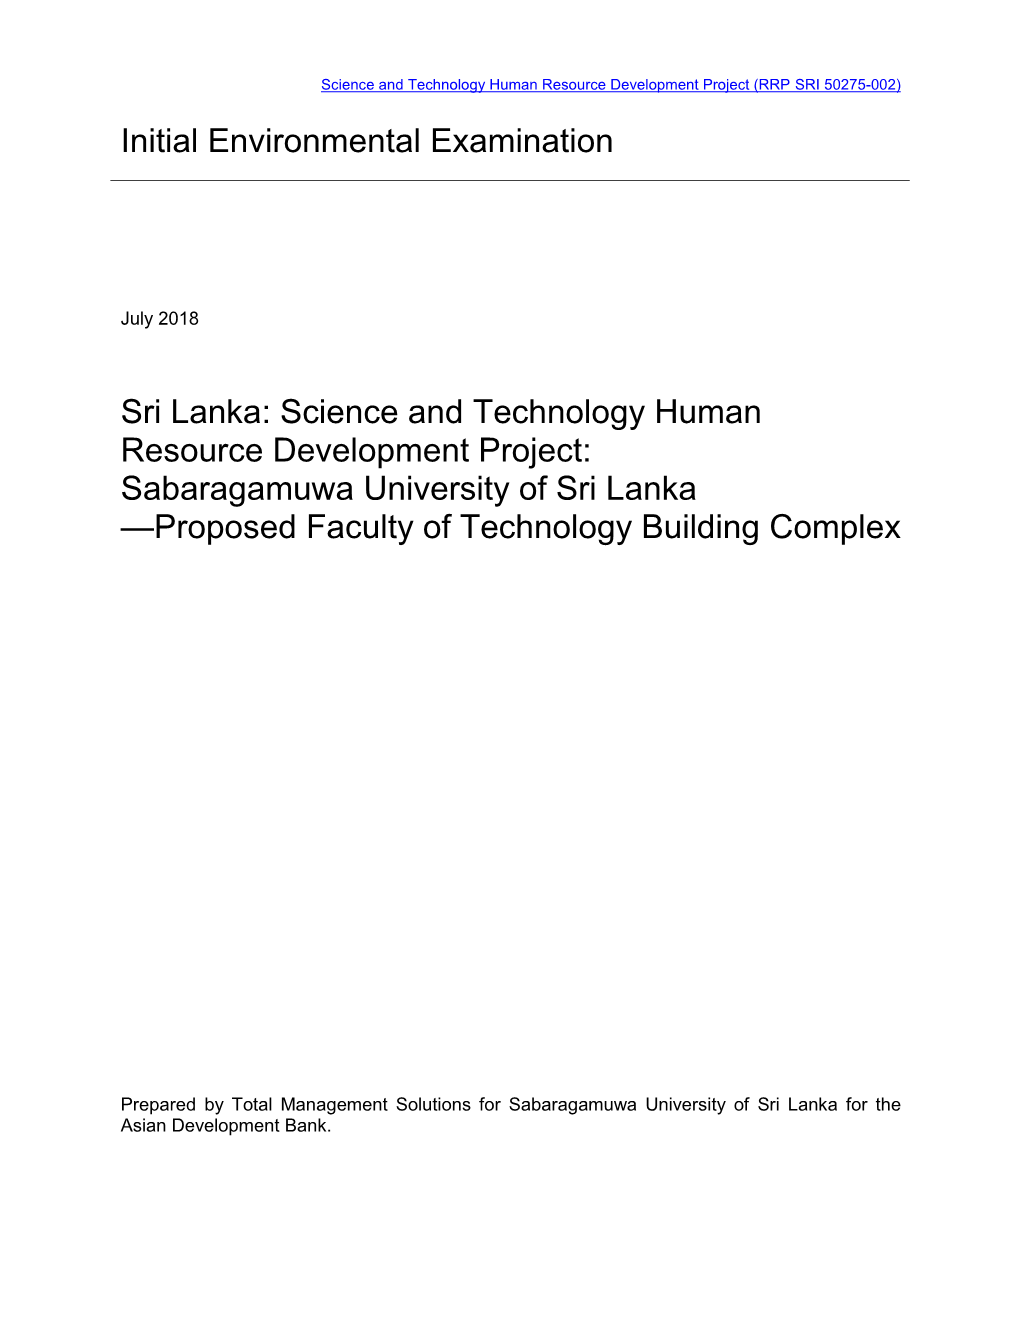 Sabaragamuwa University of Sri Lanka —Proposed Faculty of Technology Building Complex